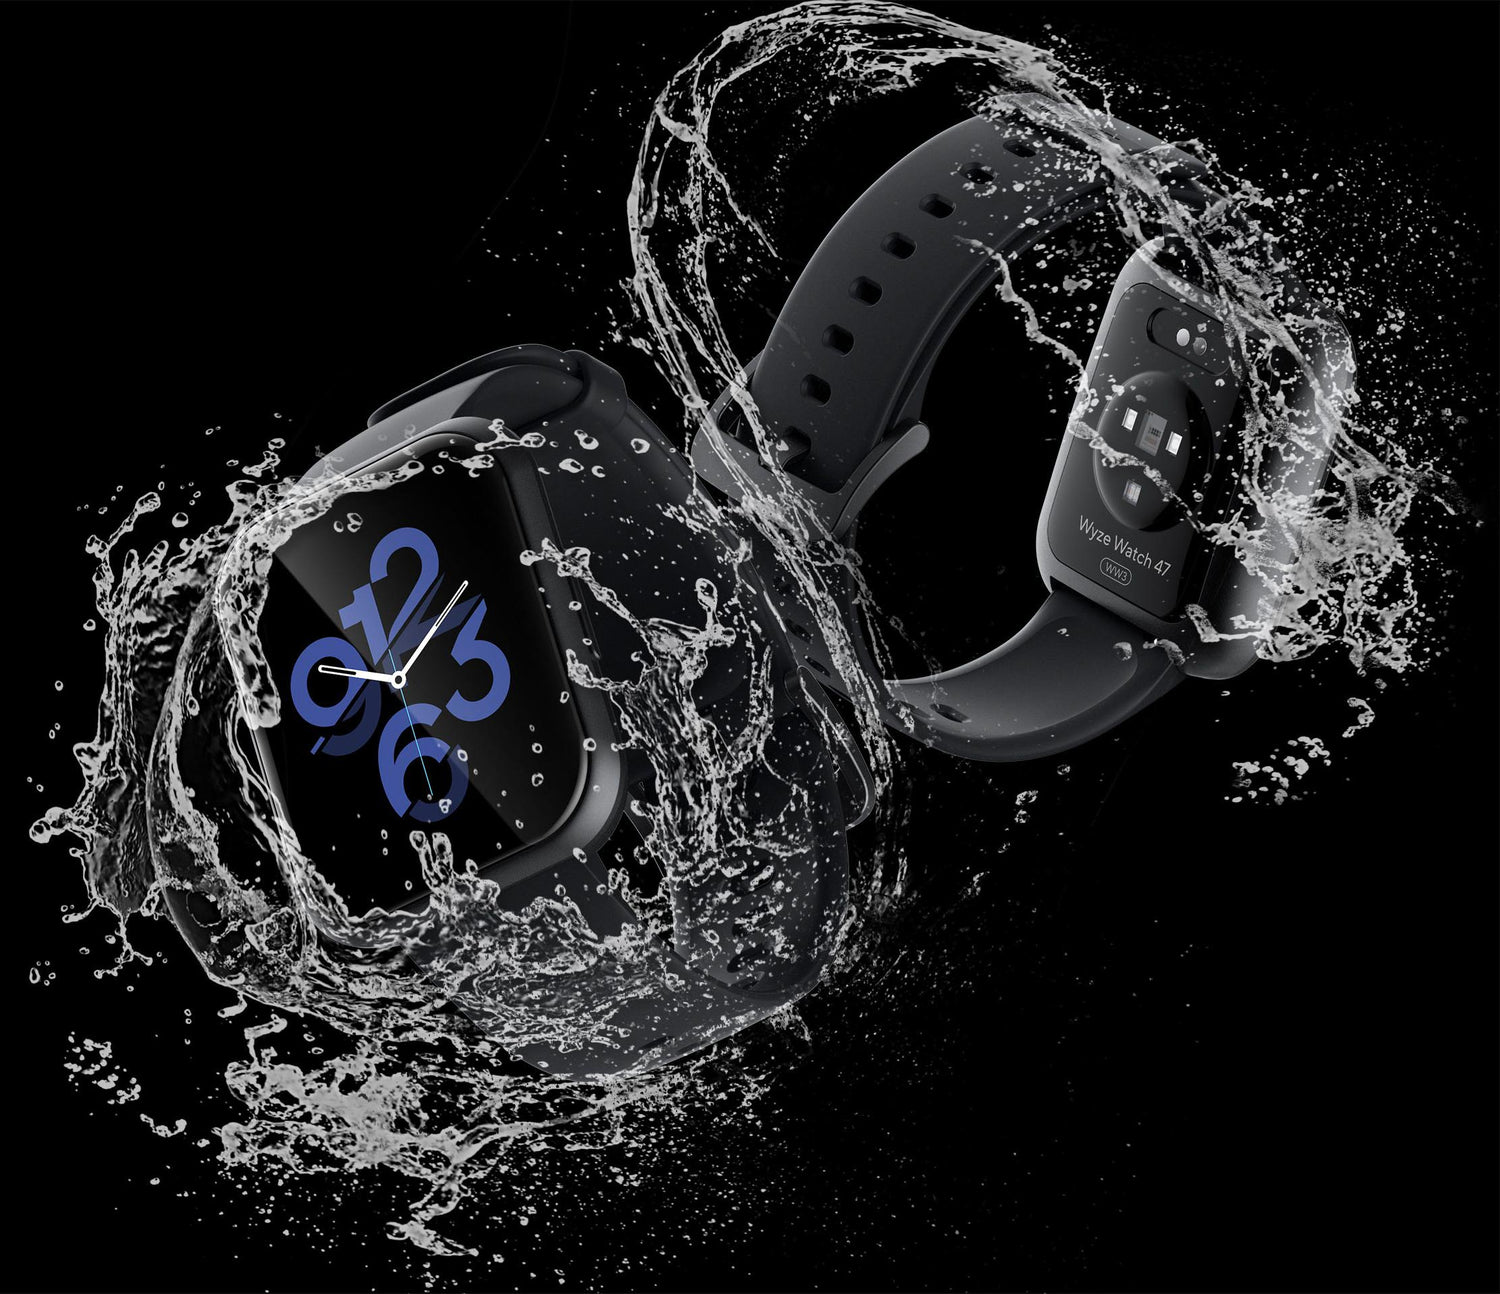 Wyze Watch 47mm Smart Watch